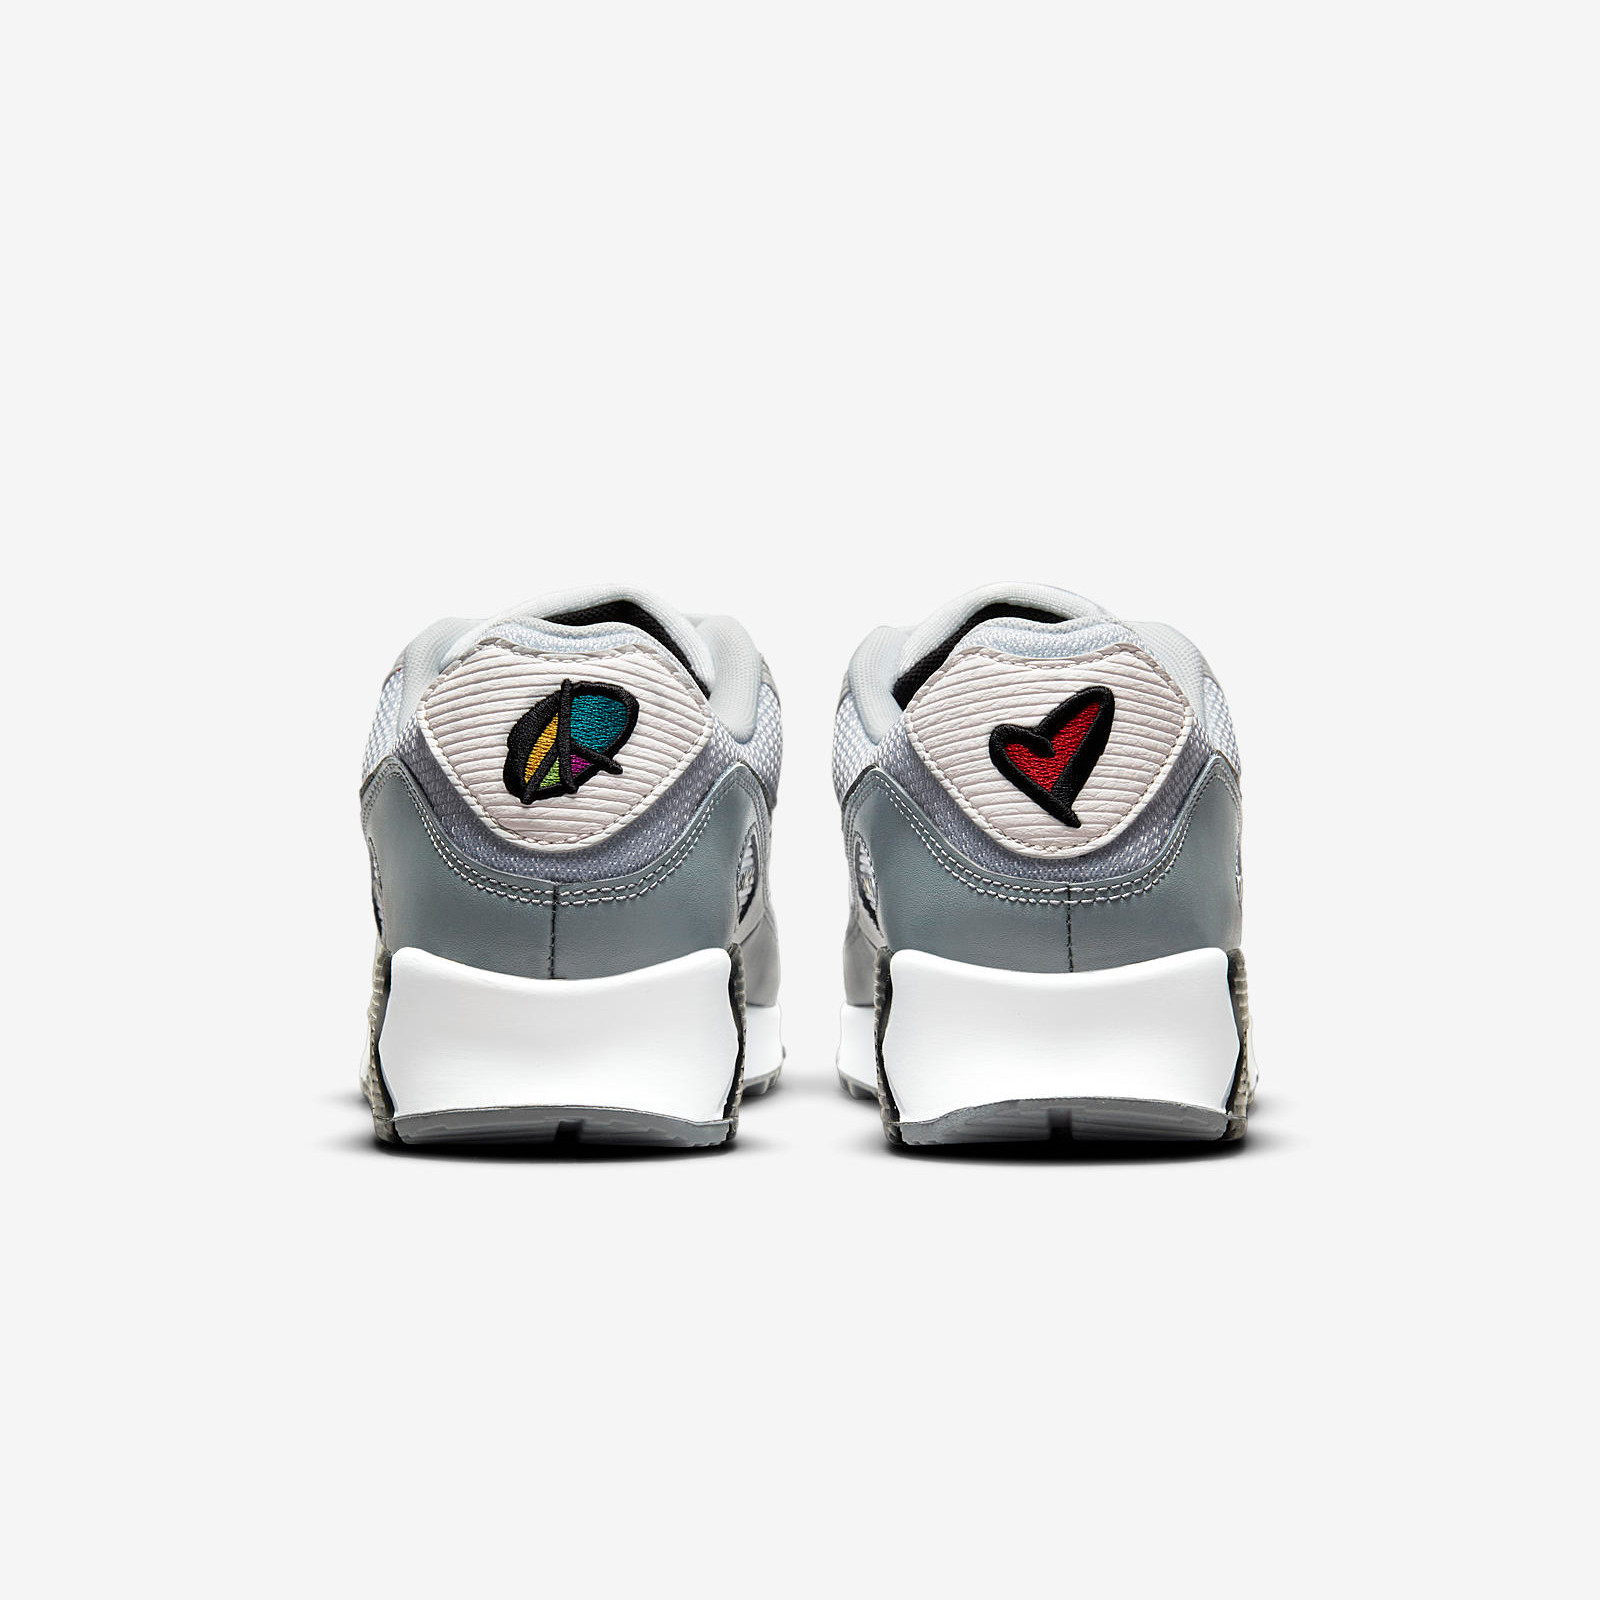 Nike Air Max 90
Peace / Love / Swoosh